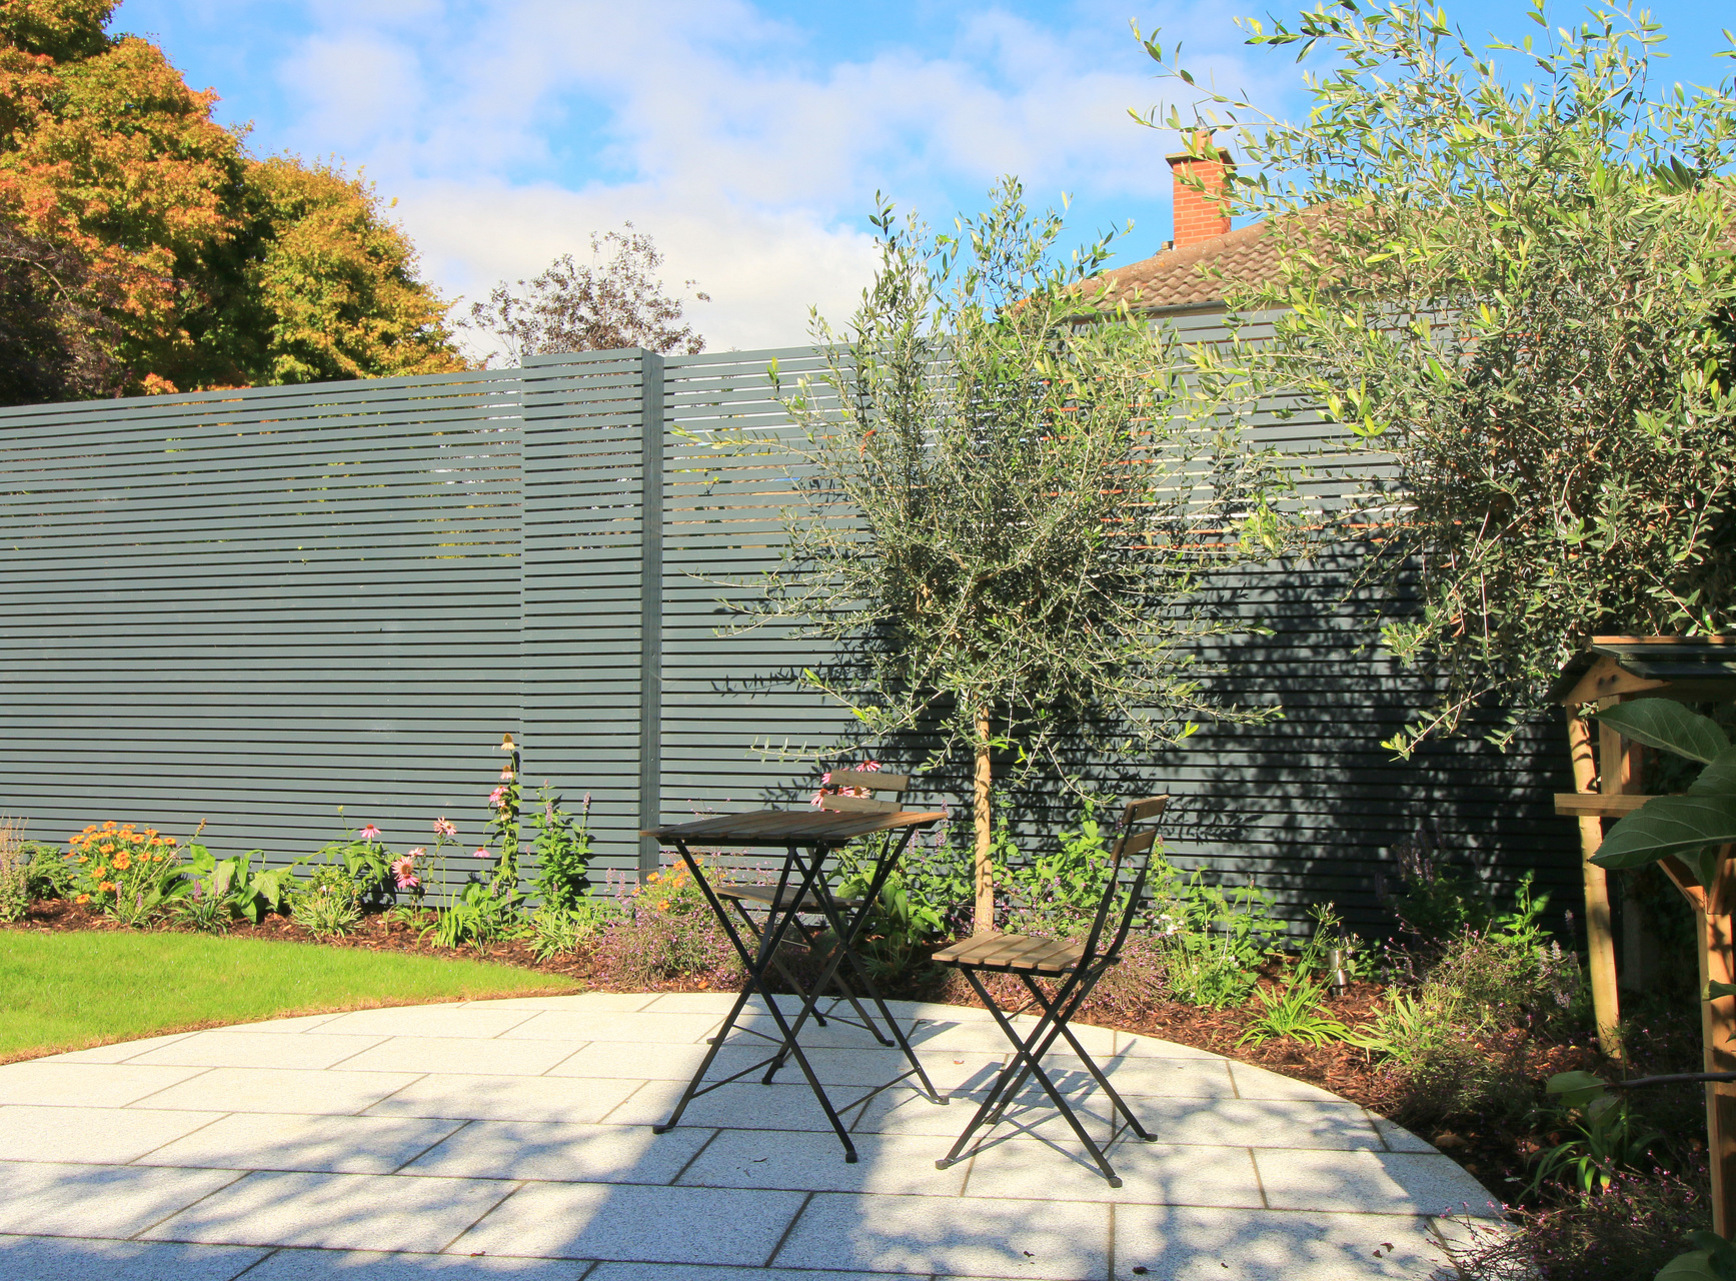 Horizontal Slatted Fence Design & Installation in Blackrock, Co Dublin | Contemporary Horizontal Slat Fencing | Custom made = Better made